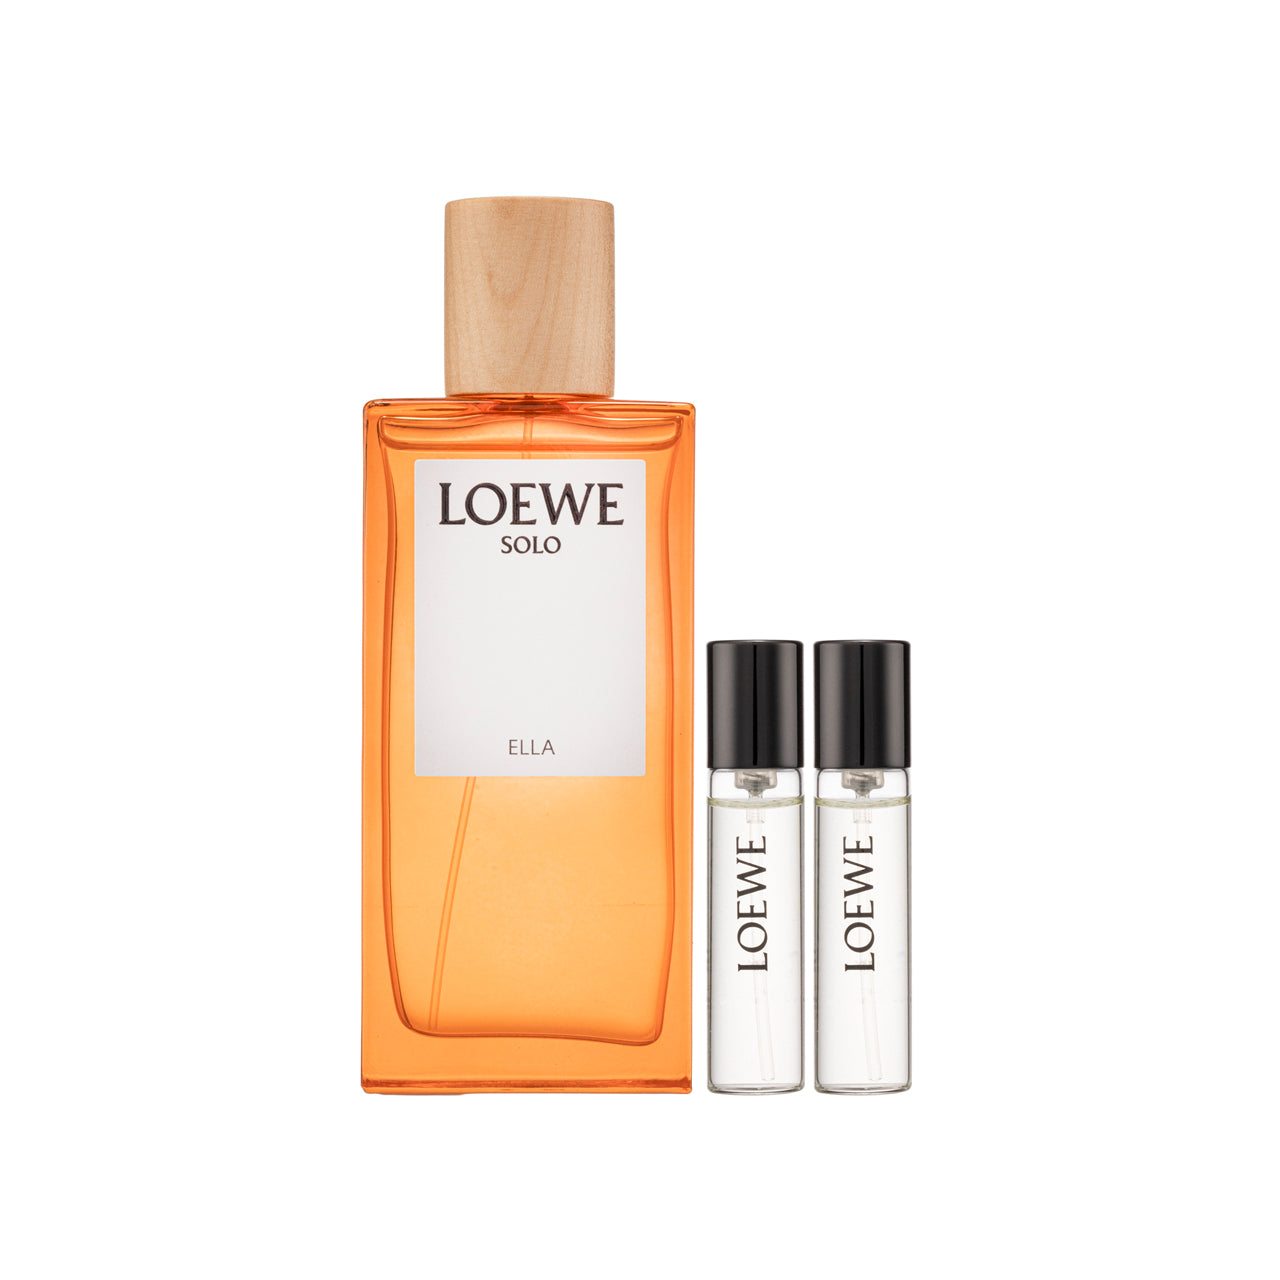 Loewe Solo Ella Eau de Parfum Gift Set 3pc